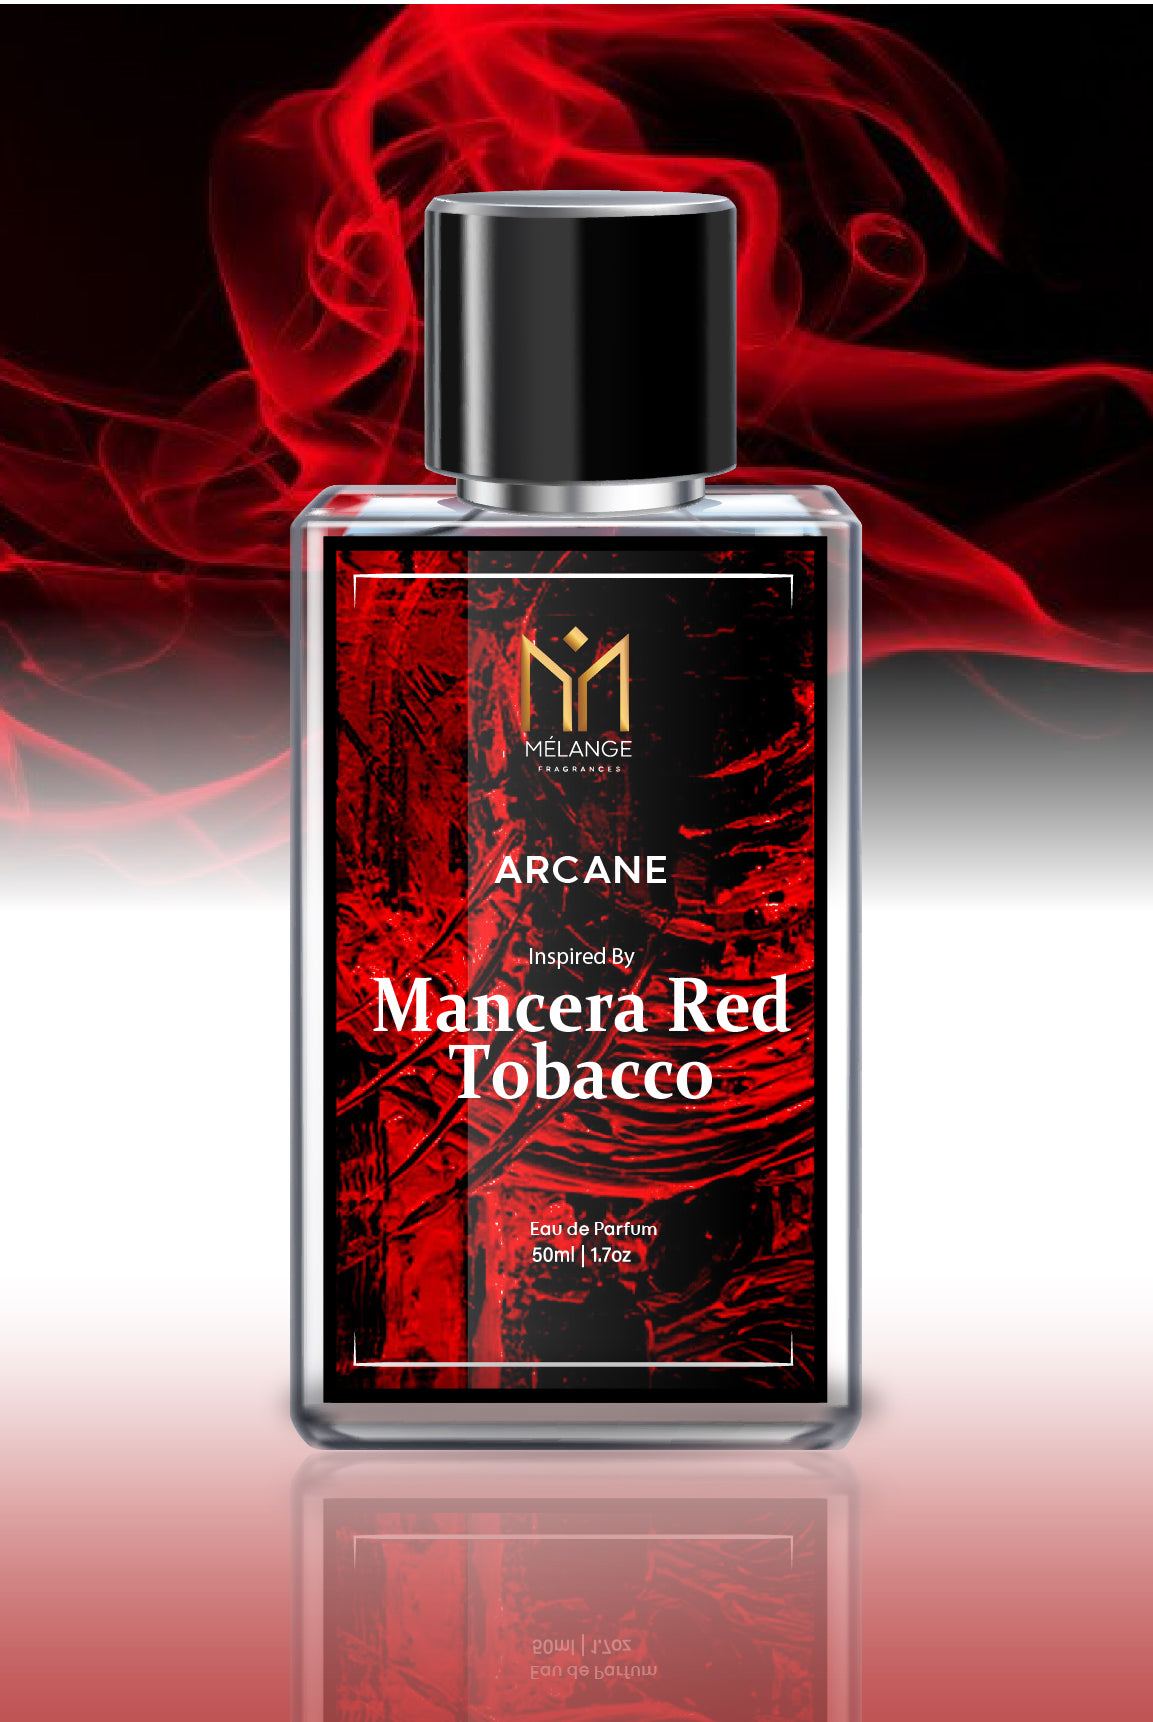 ARCANE- Inspired by Mancera Red Tobacco